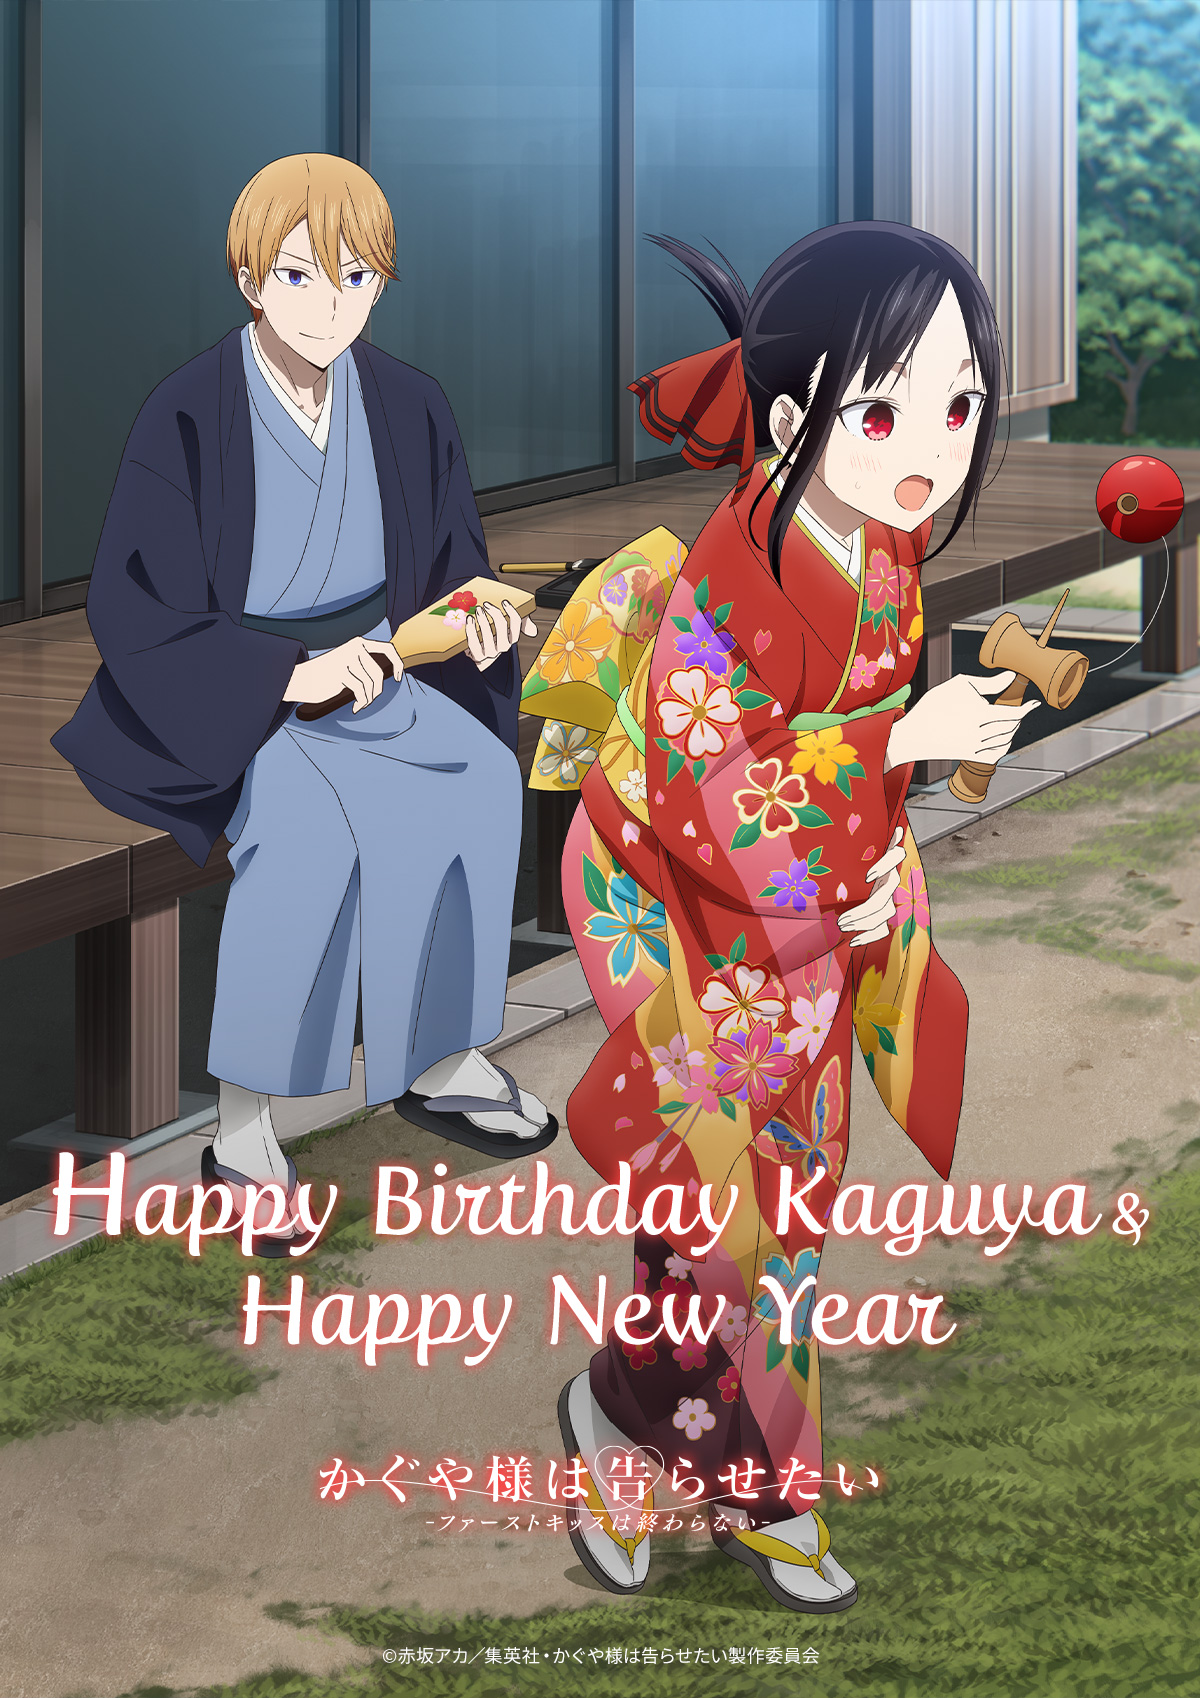 Nytår 2023 illustration samt fødselsdagshilsen fra Kaguya-sama: Love is War